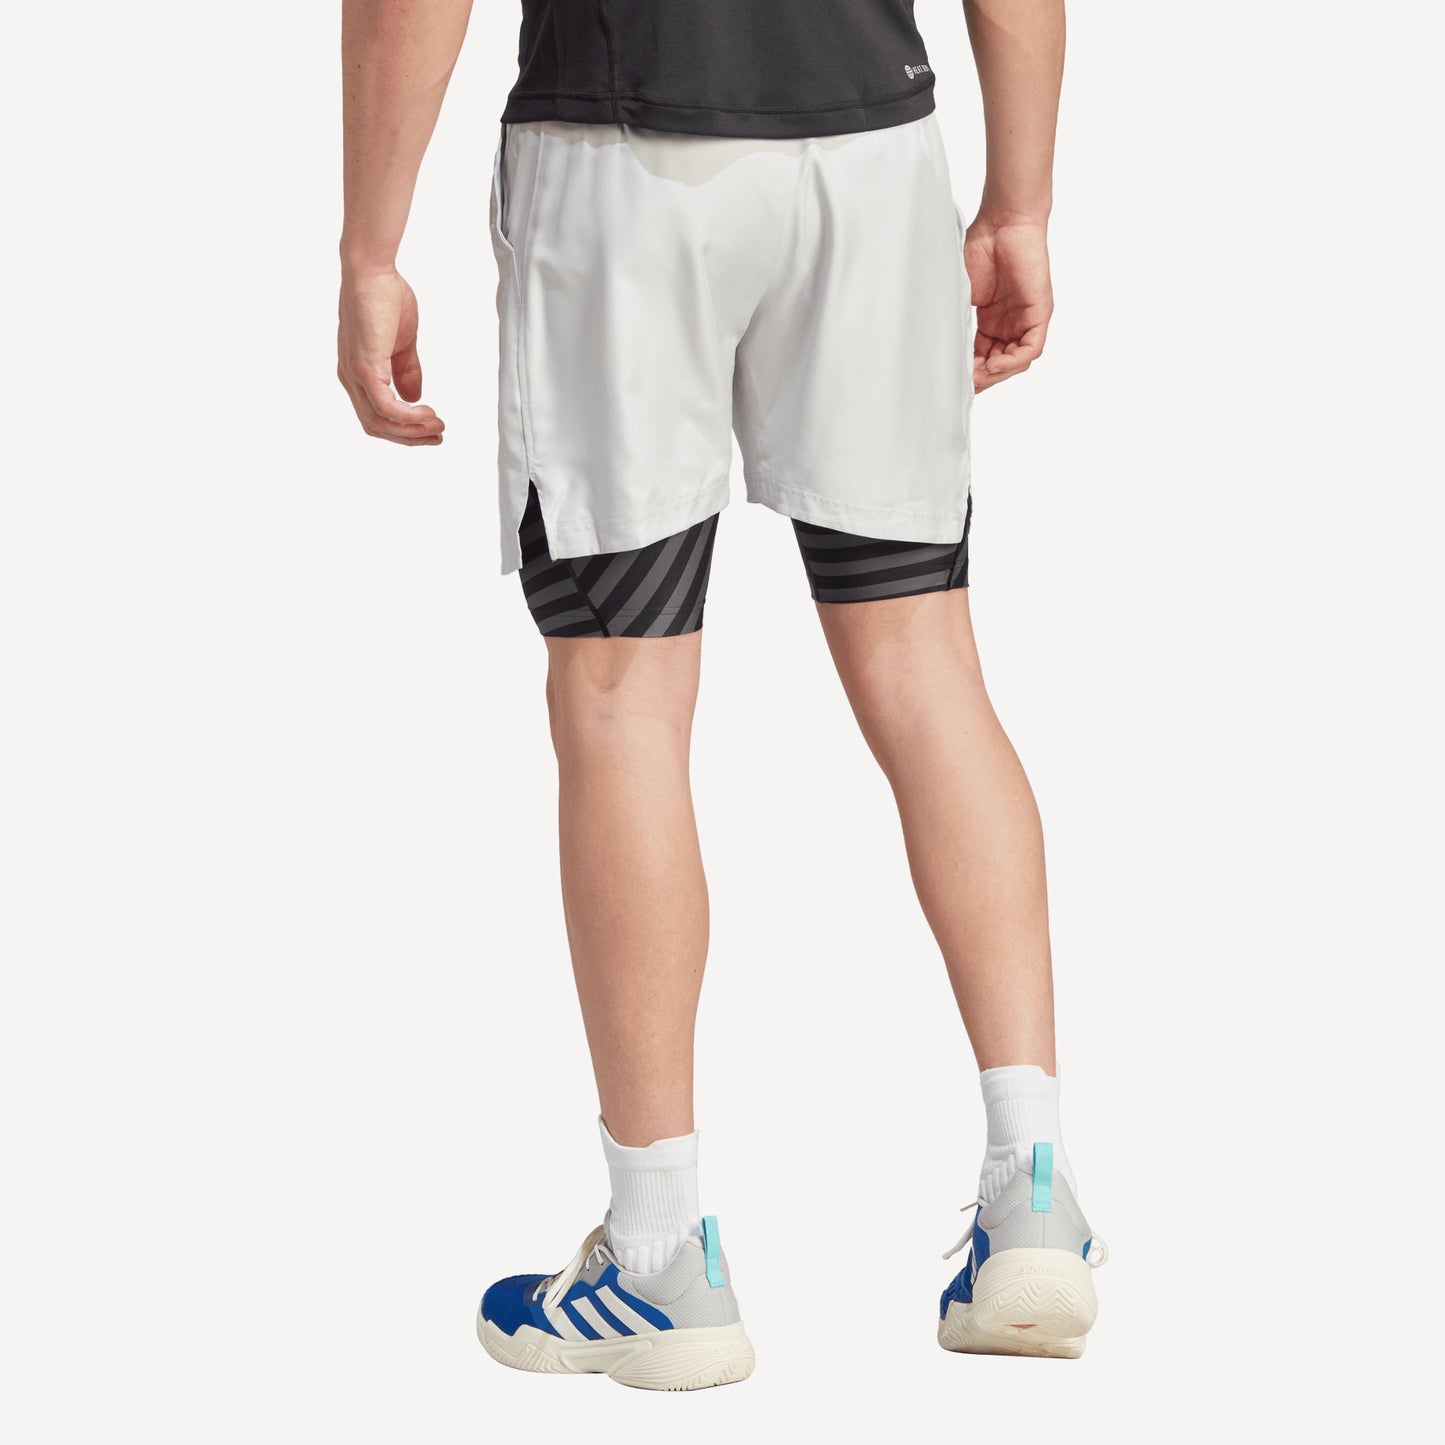 adidas New York Pro Men's 2IN1 Tennis Shorts Grey (2)